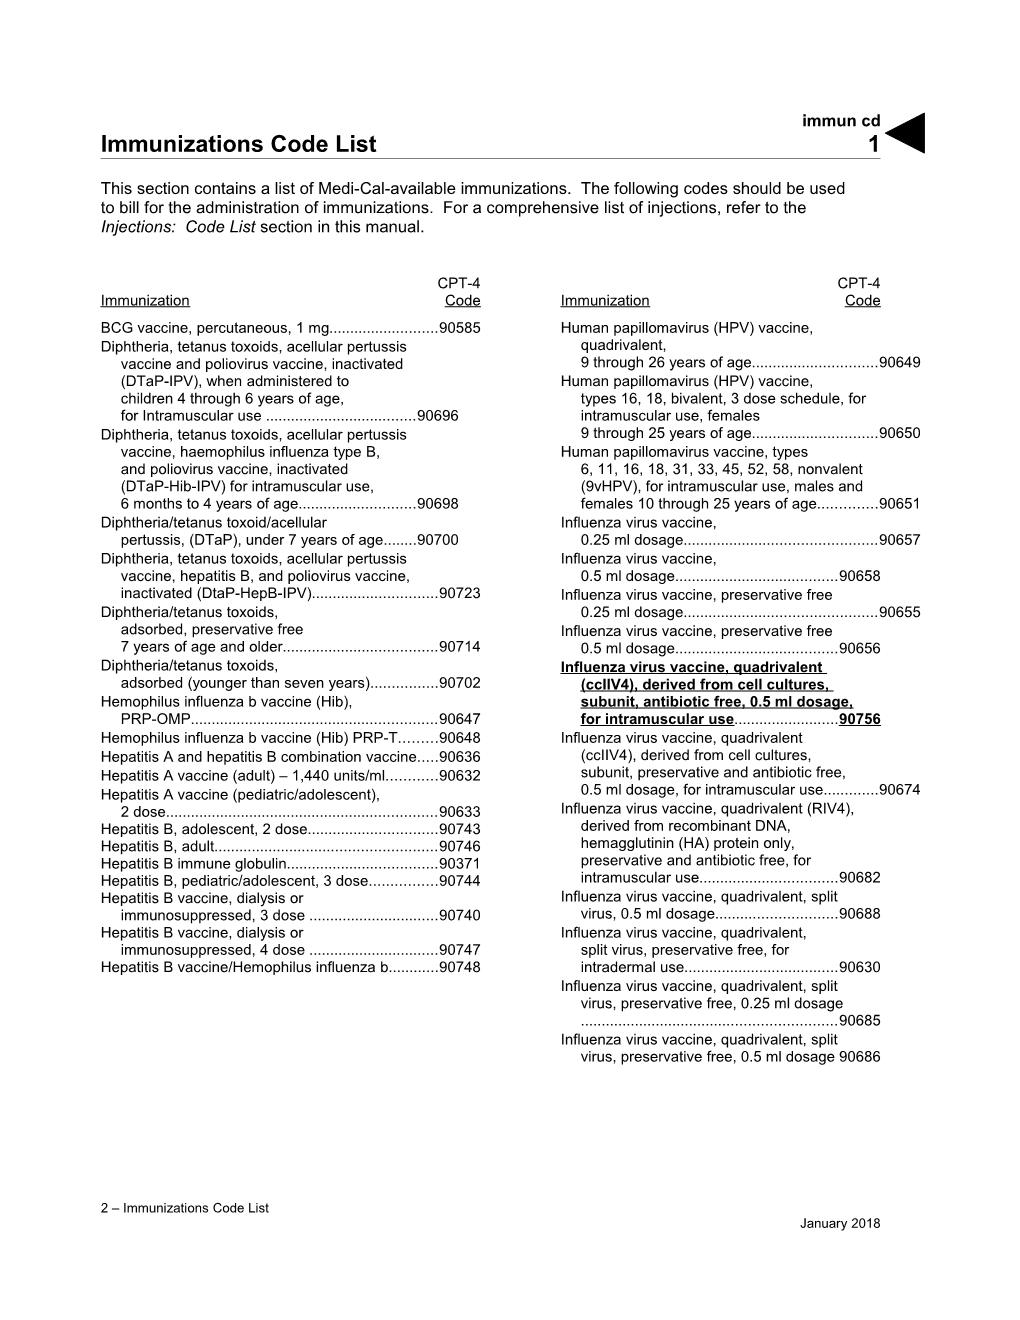 Immunizations Code List (Immun Cd)